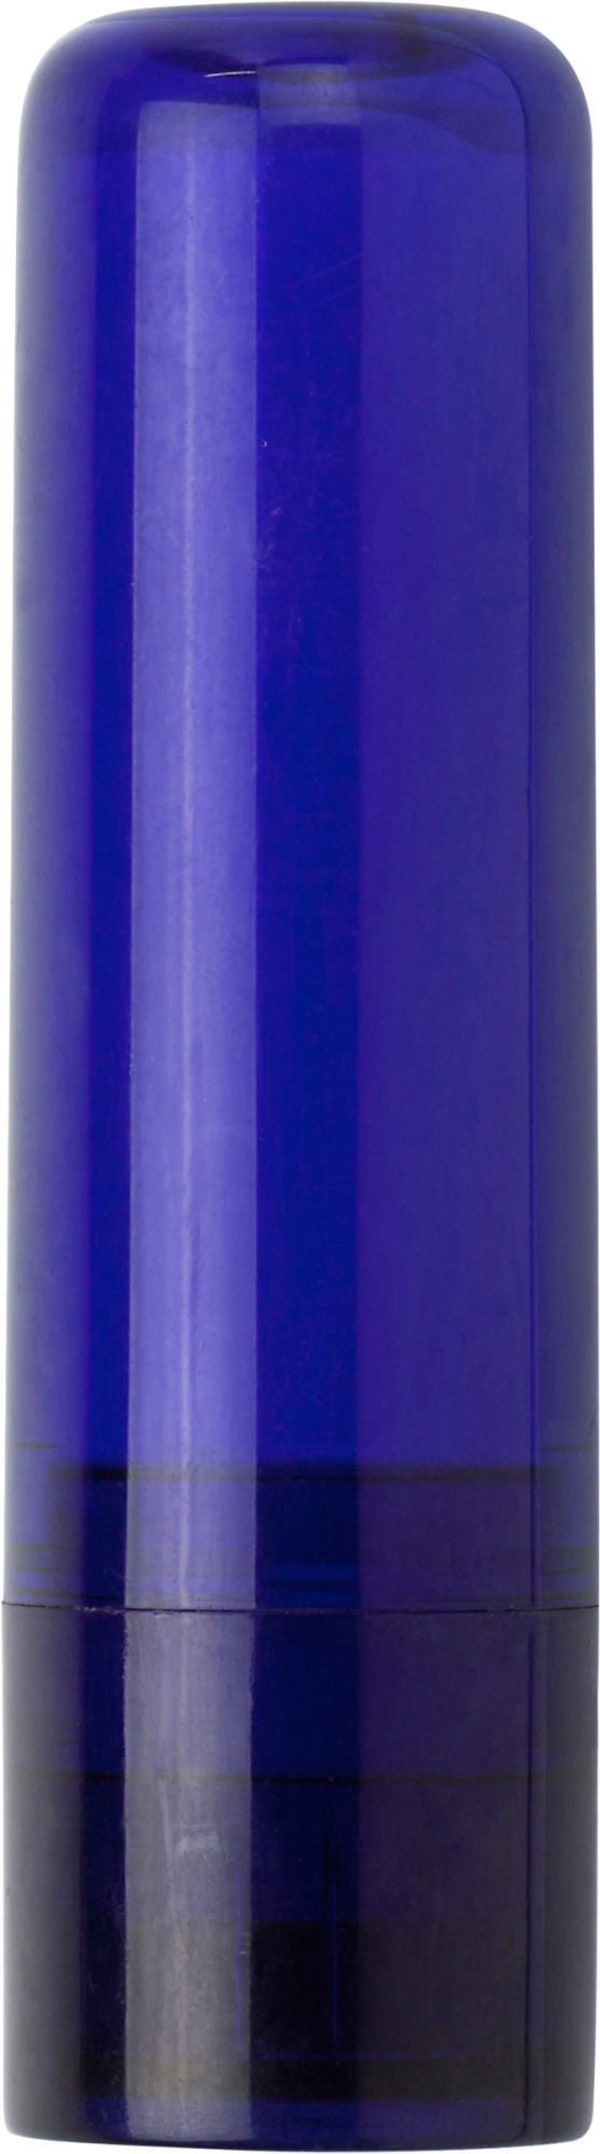 Lippenbalsam-Basic-Blau-Frontansicht-1